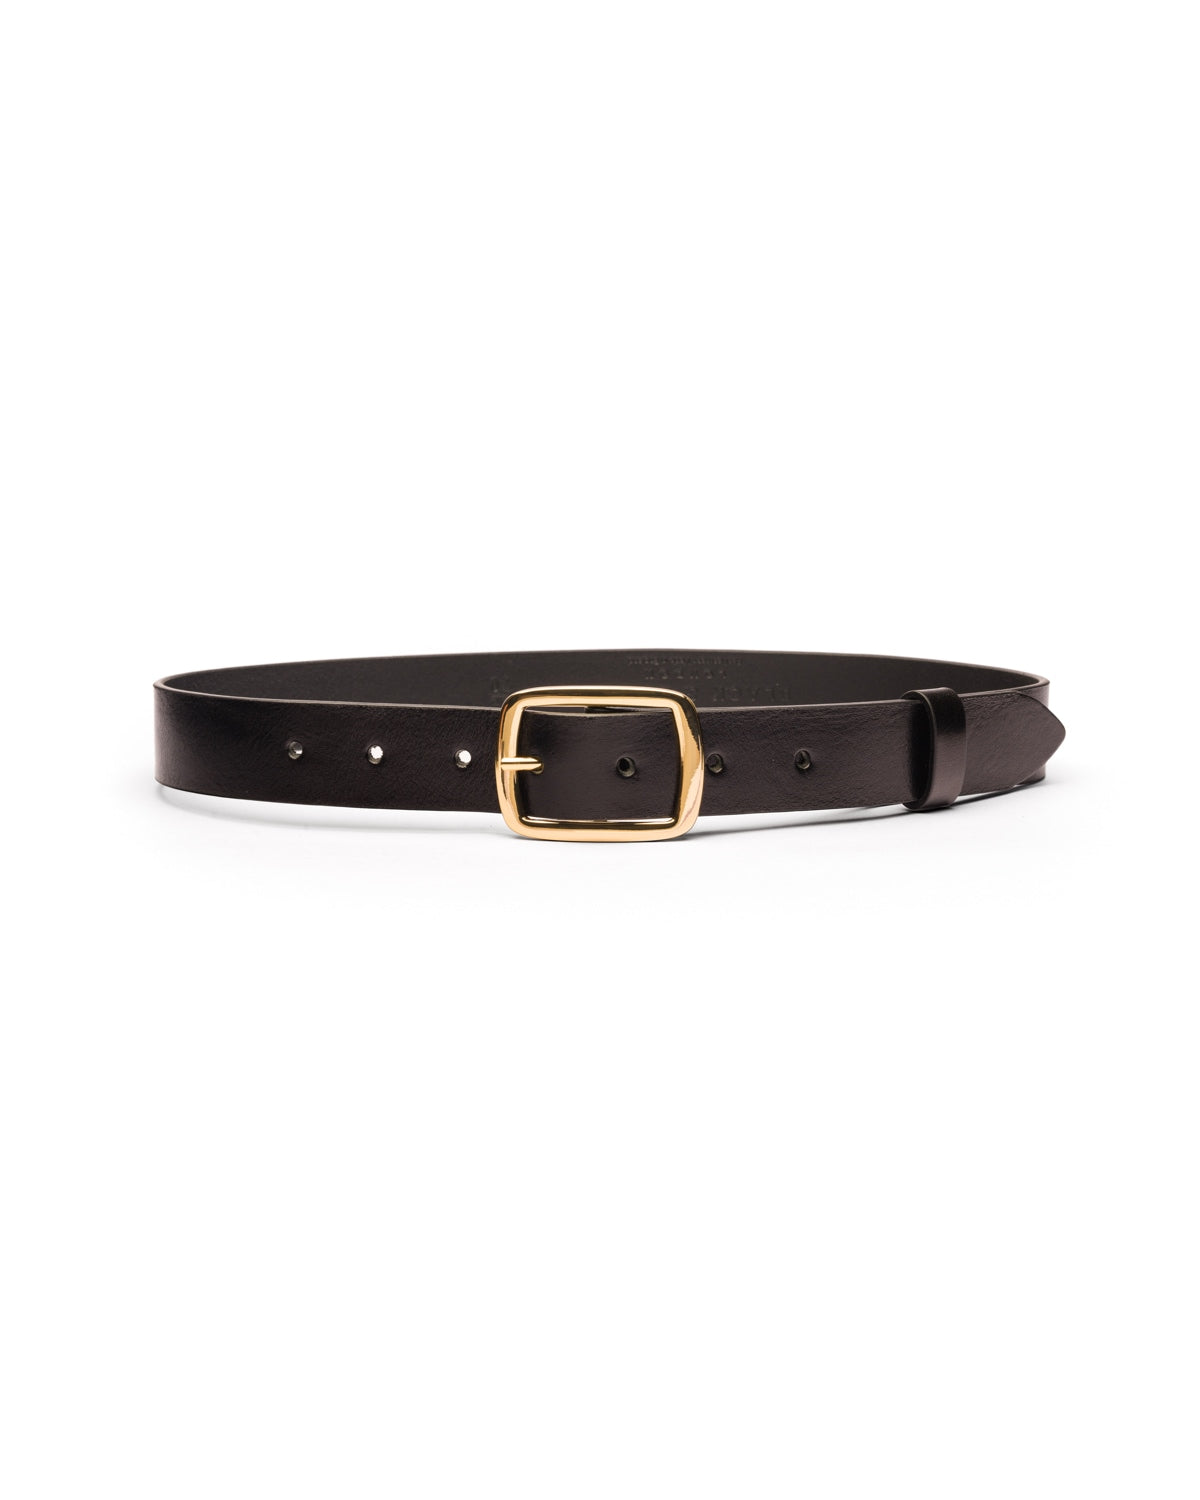 Avery gold buckle black leather belt